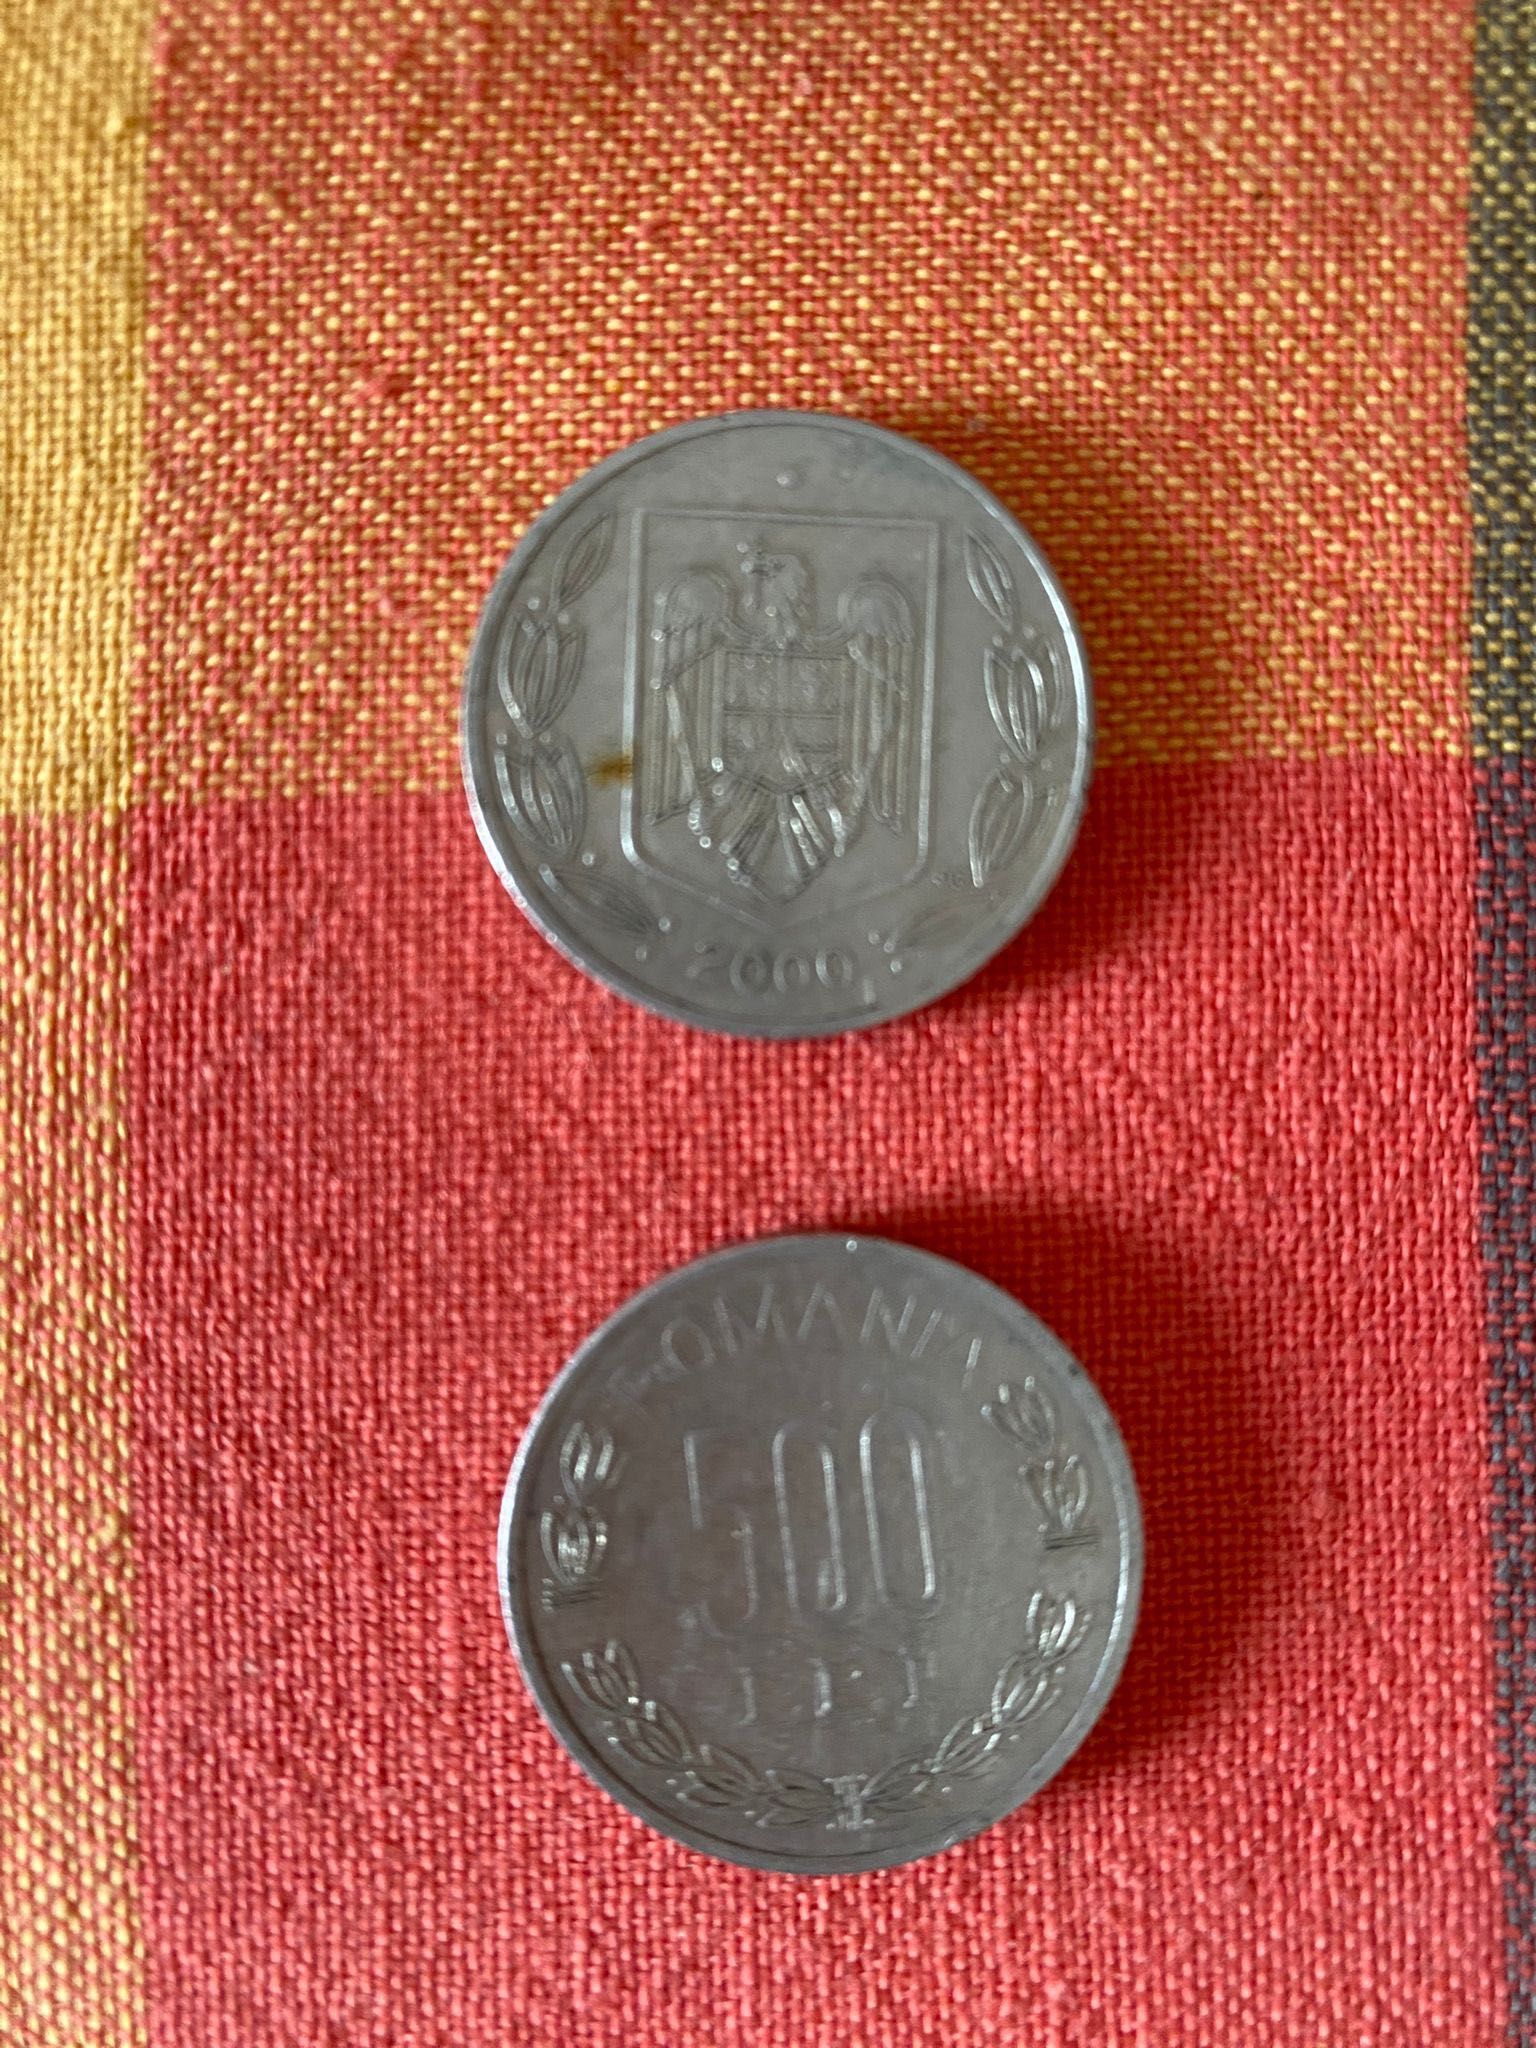 Monede si bancnote colectie